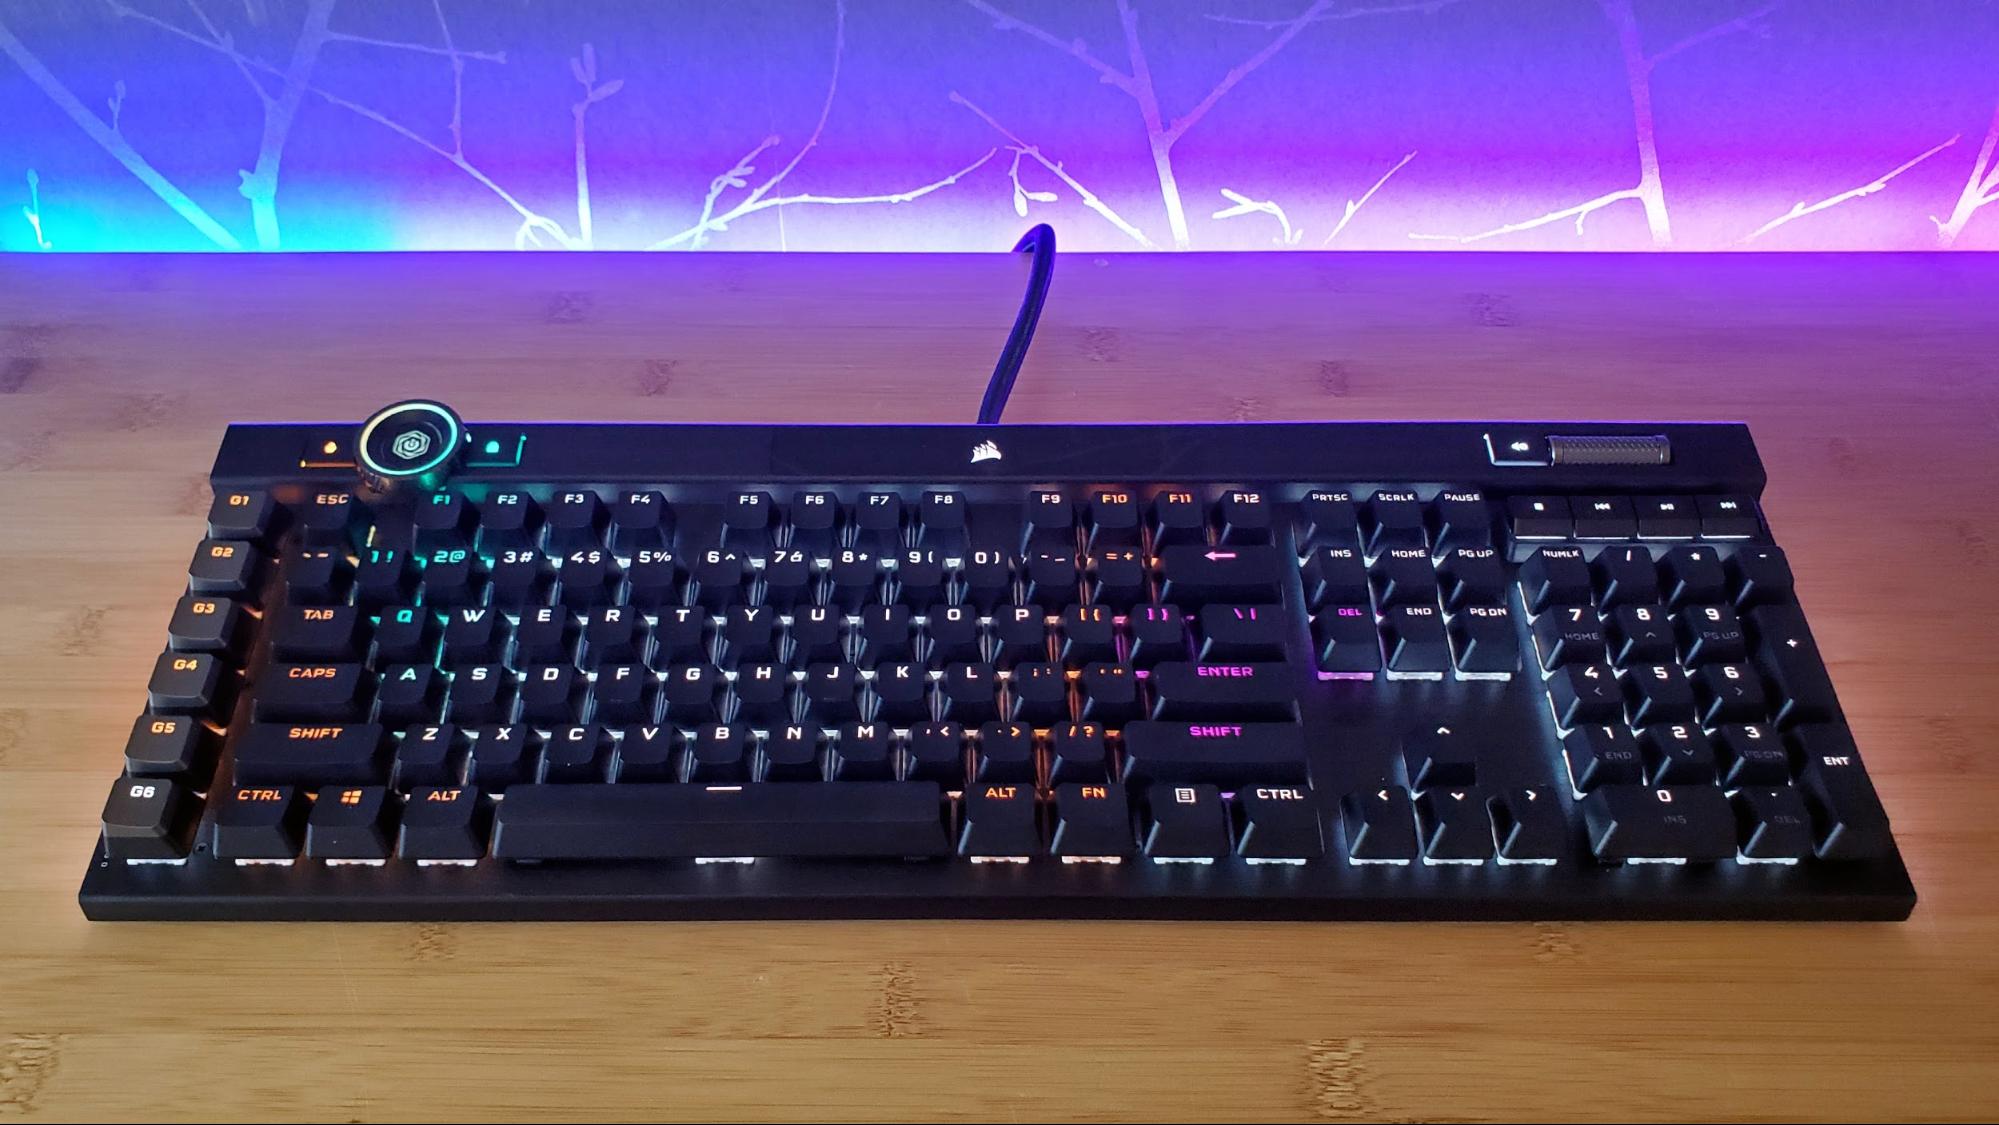 re Optical Keyboards Better than Mechanical